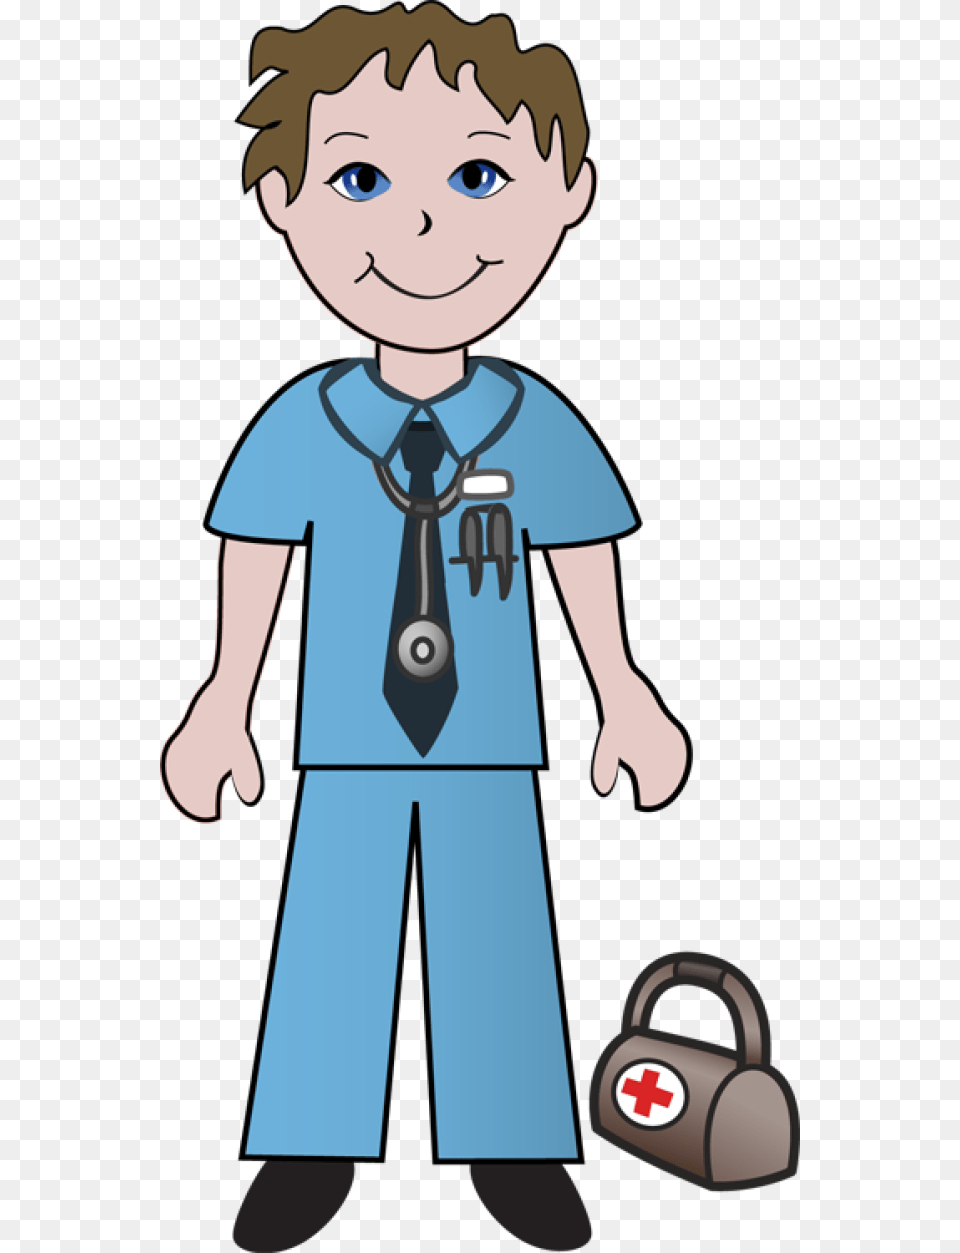 Clip Art Of Doctors And Nurses Doctor Clip Art Etc, Accessories, Formal Wear, Tie, Baby Free Png Download